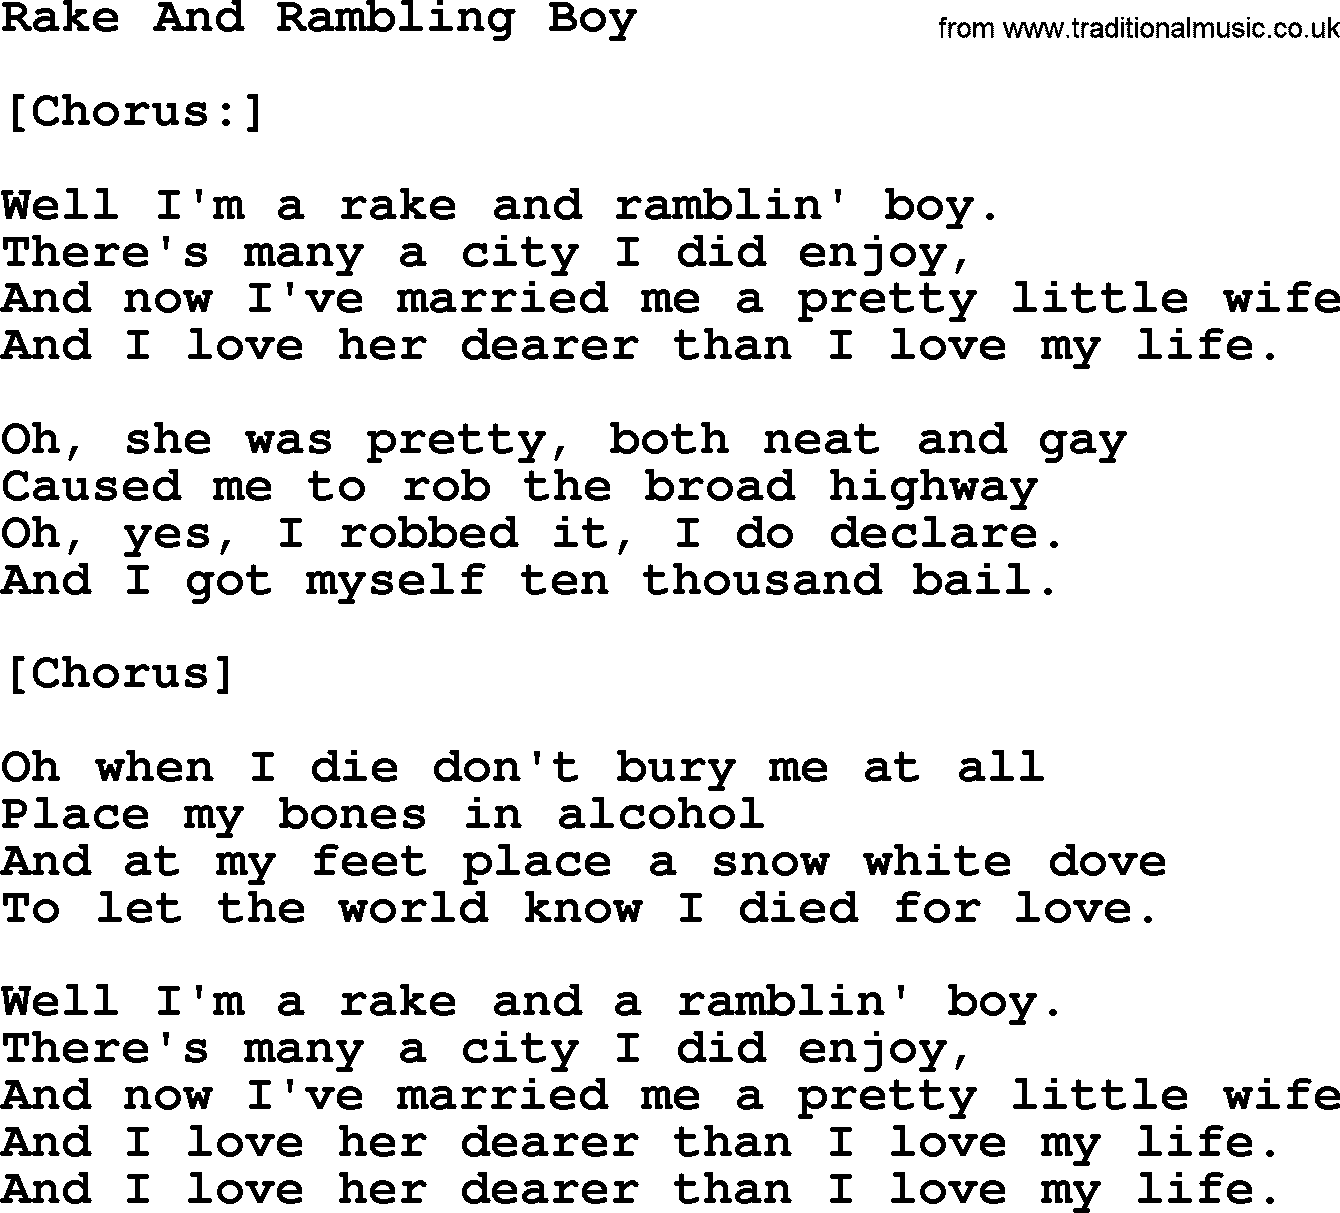 Joan Baez song Rake And Rambling Boy, lyrics